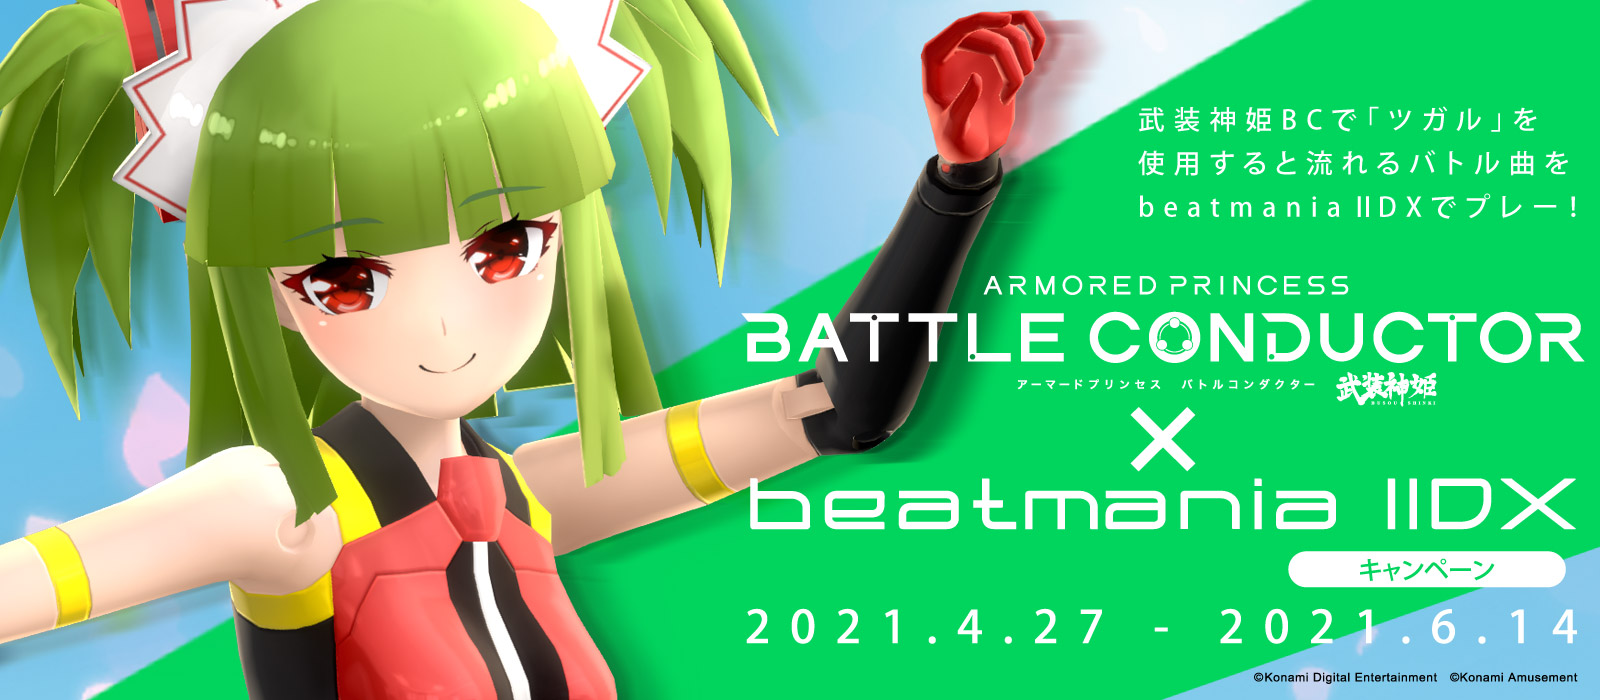 KONAMI 音楽ゲーム『武装神姫』と『beatmania IIDX』のコラボキャンペーン楽曲にらっぷびと参加